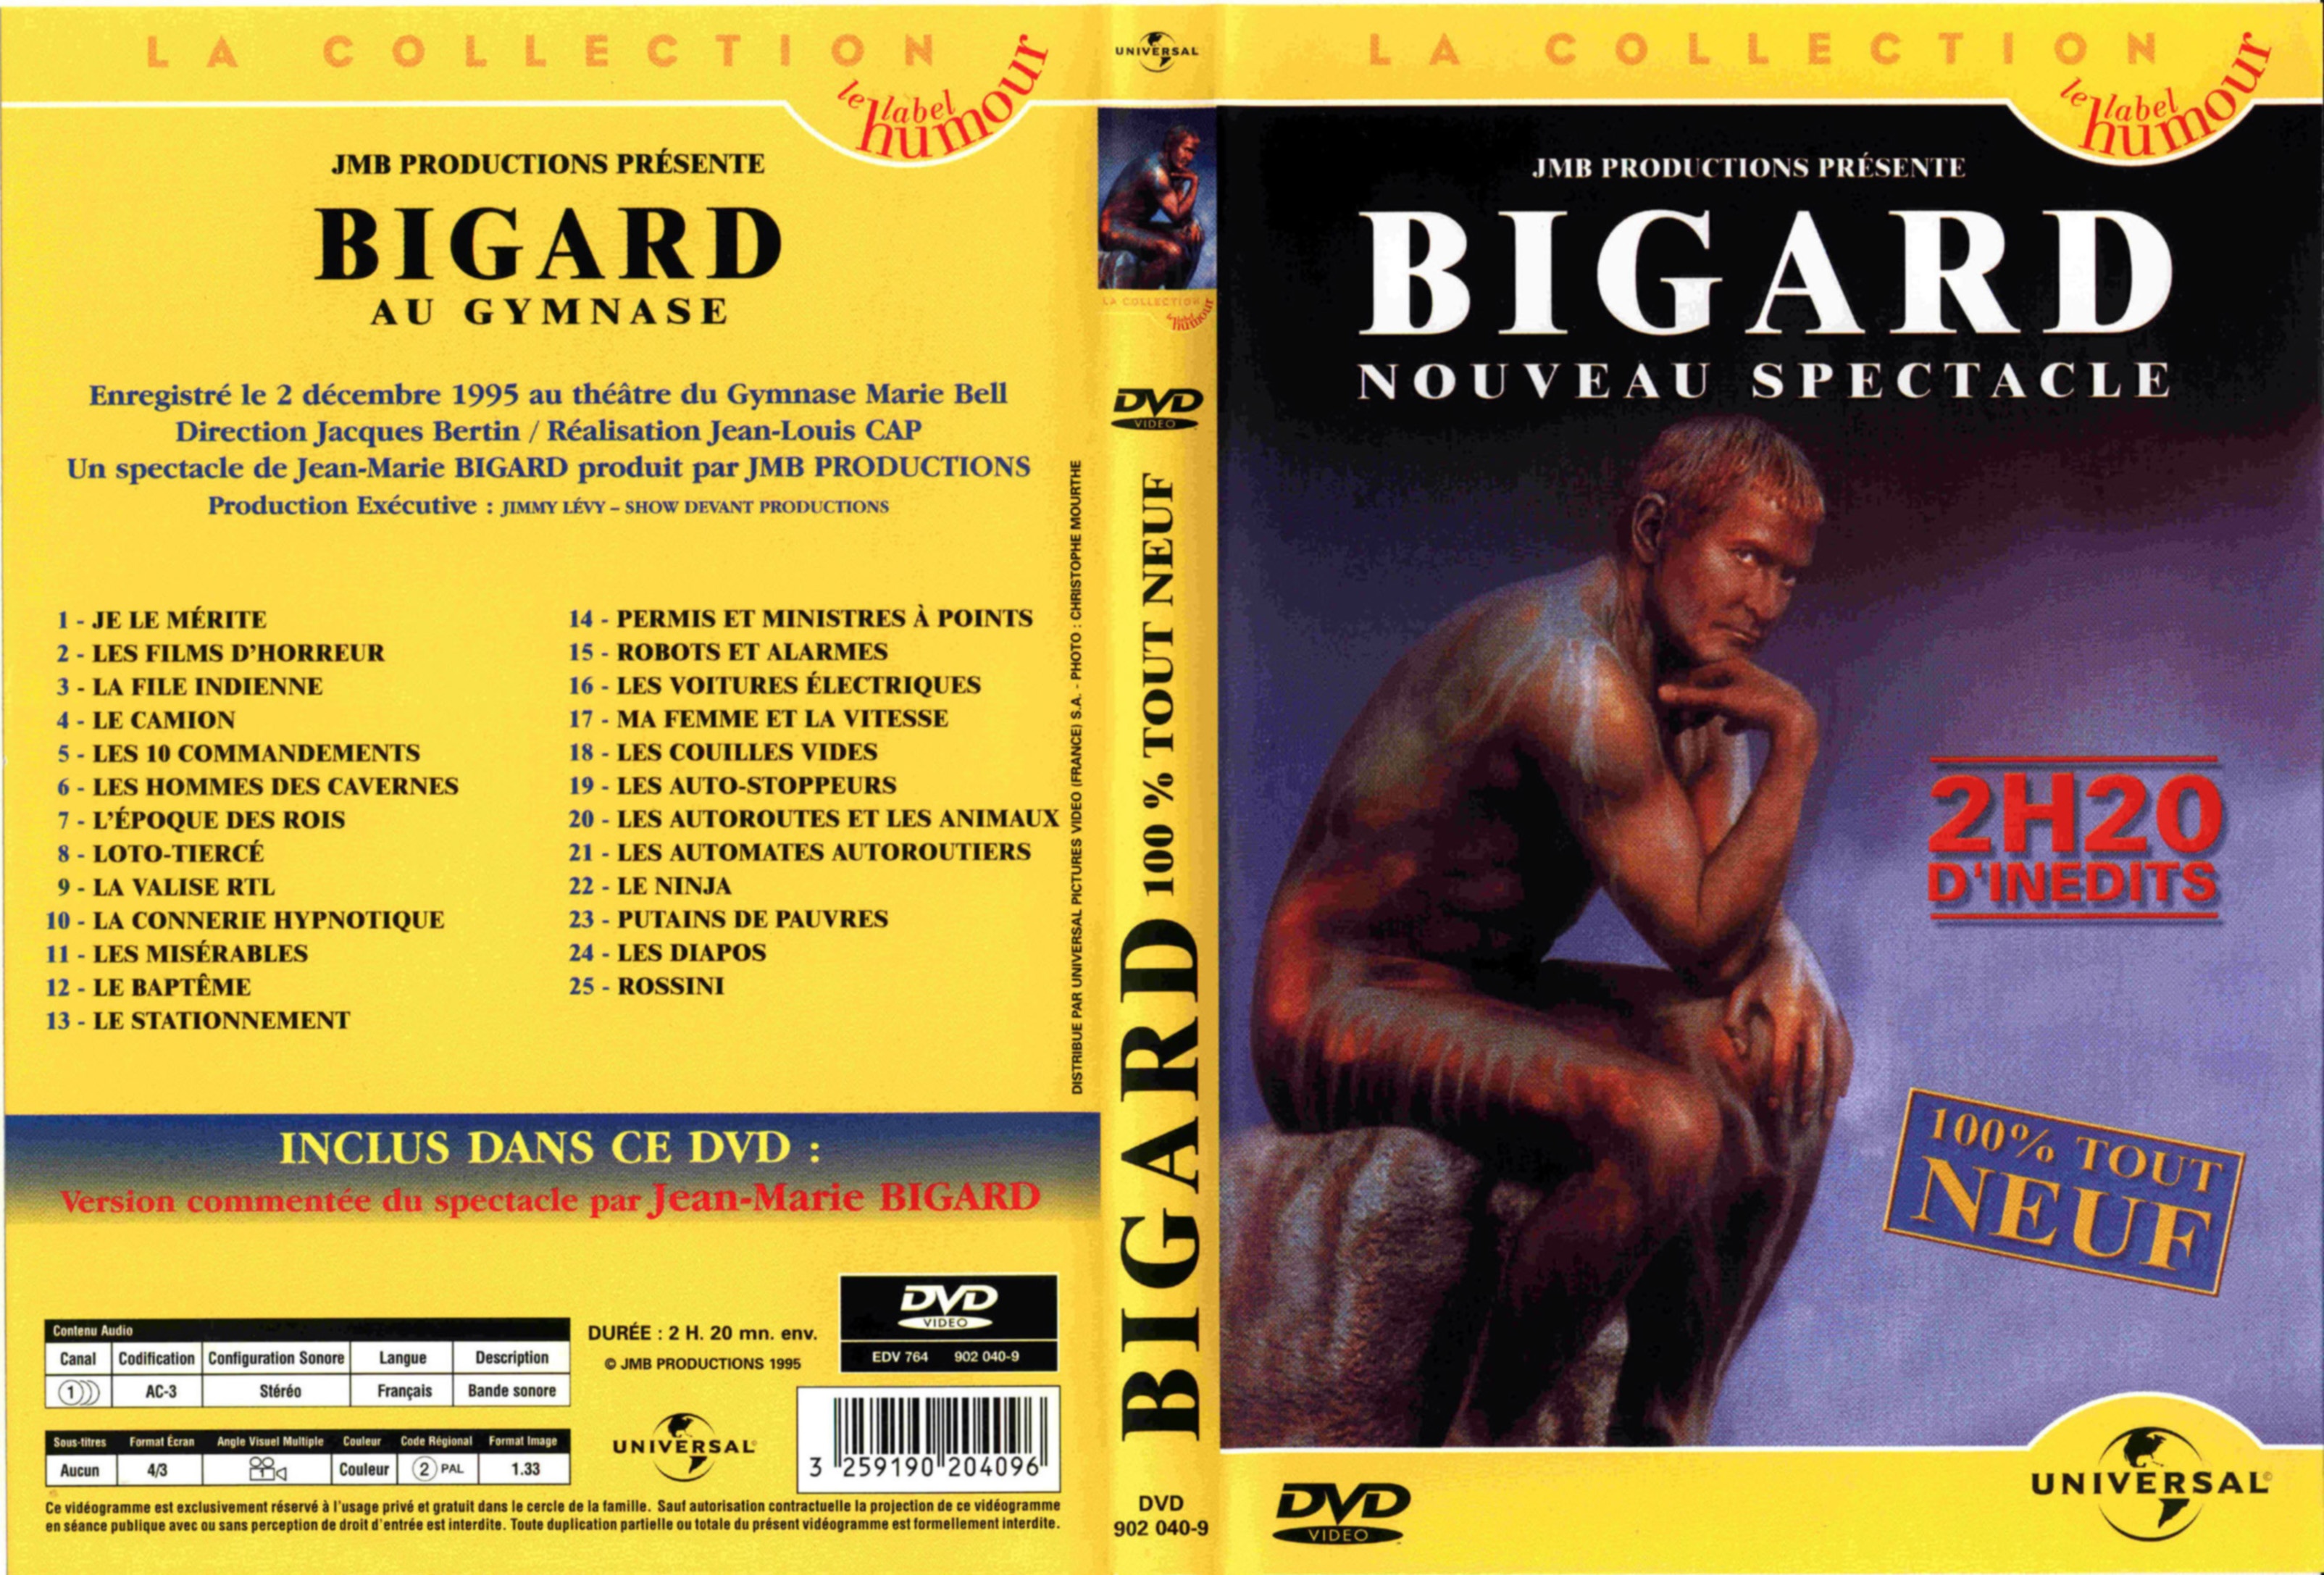 Jaquette DVD Bigard 100 tout neuf